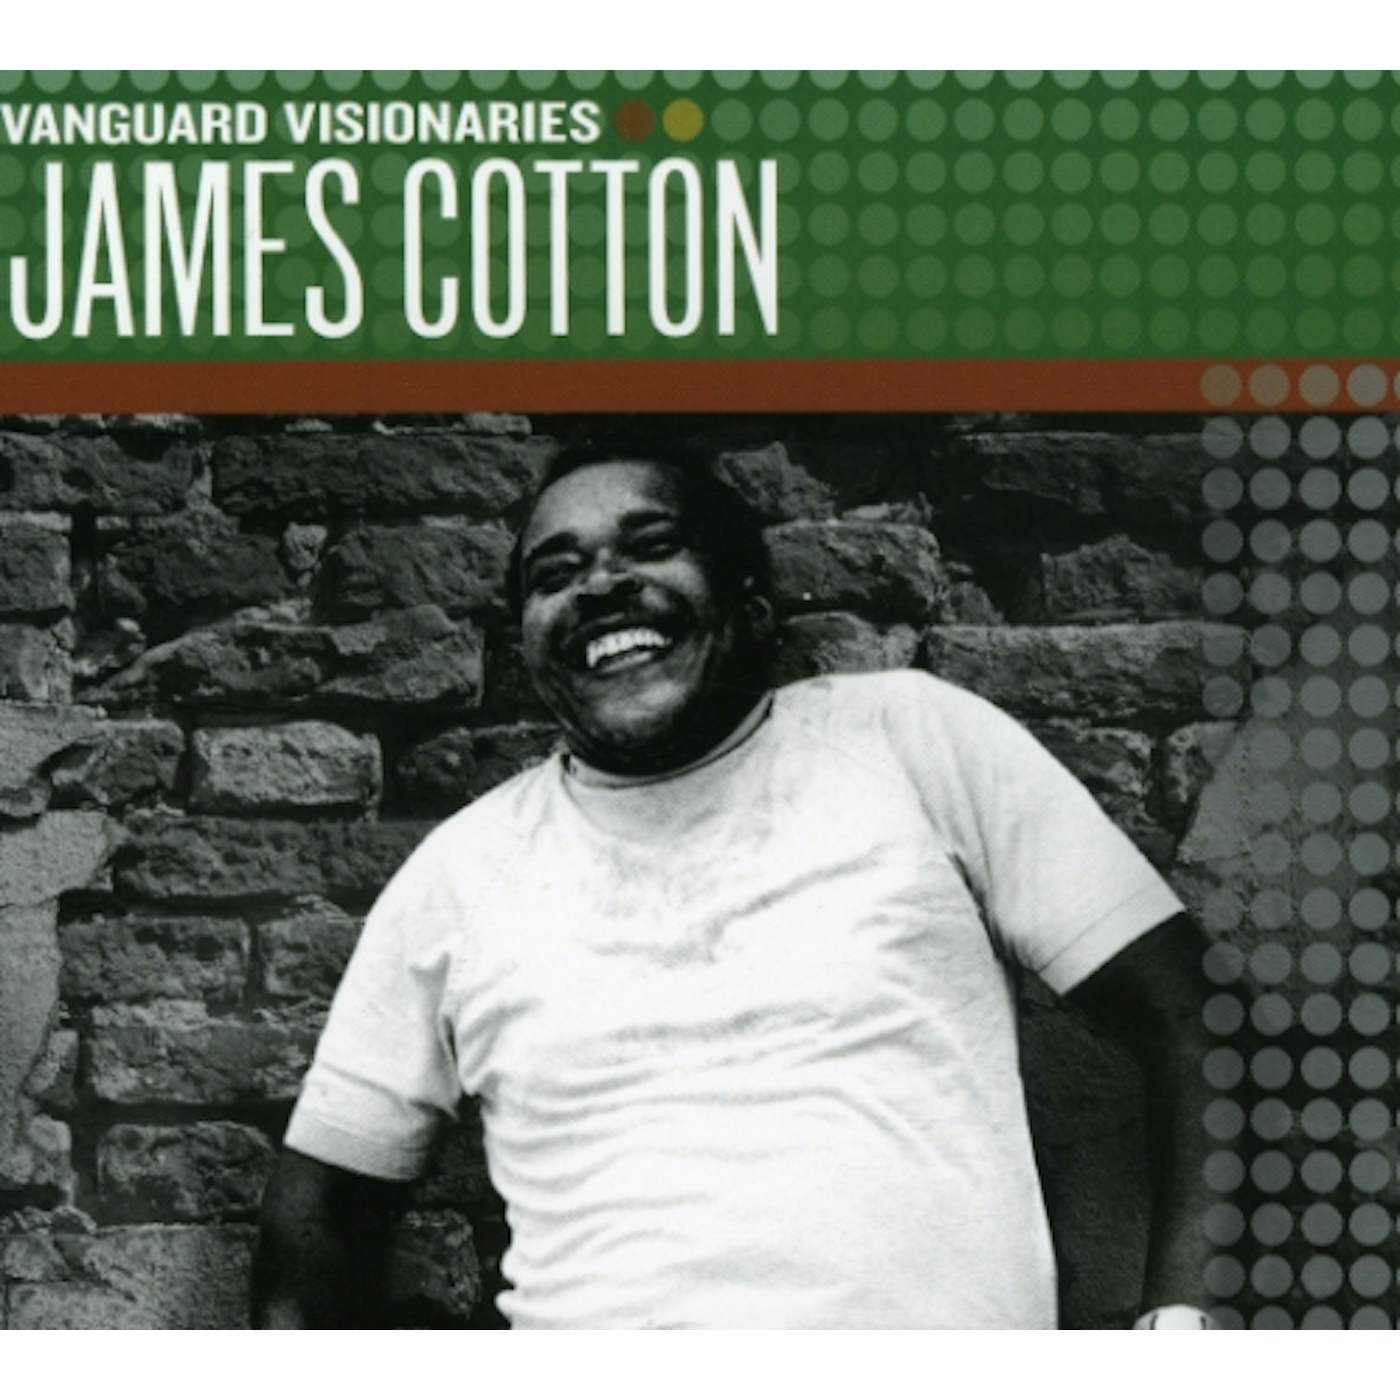 James Cotton VANGUARD VISIONARIES CD